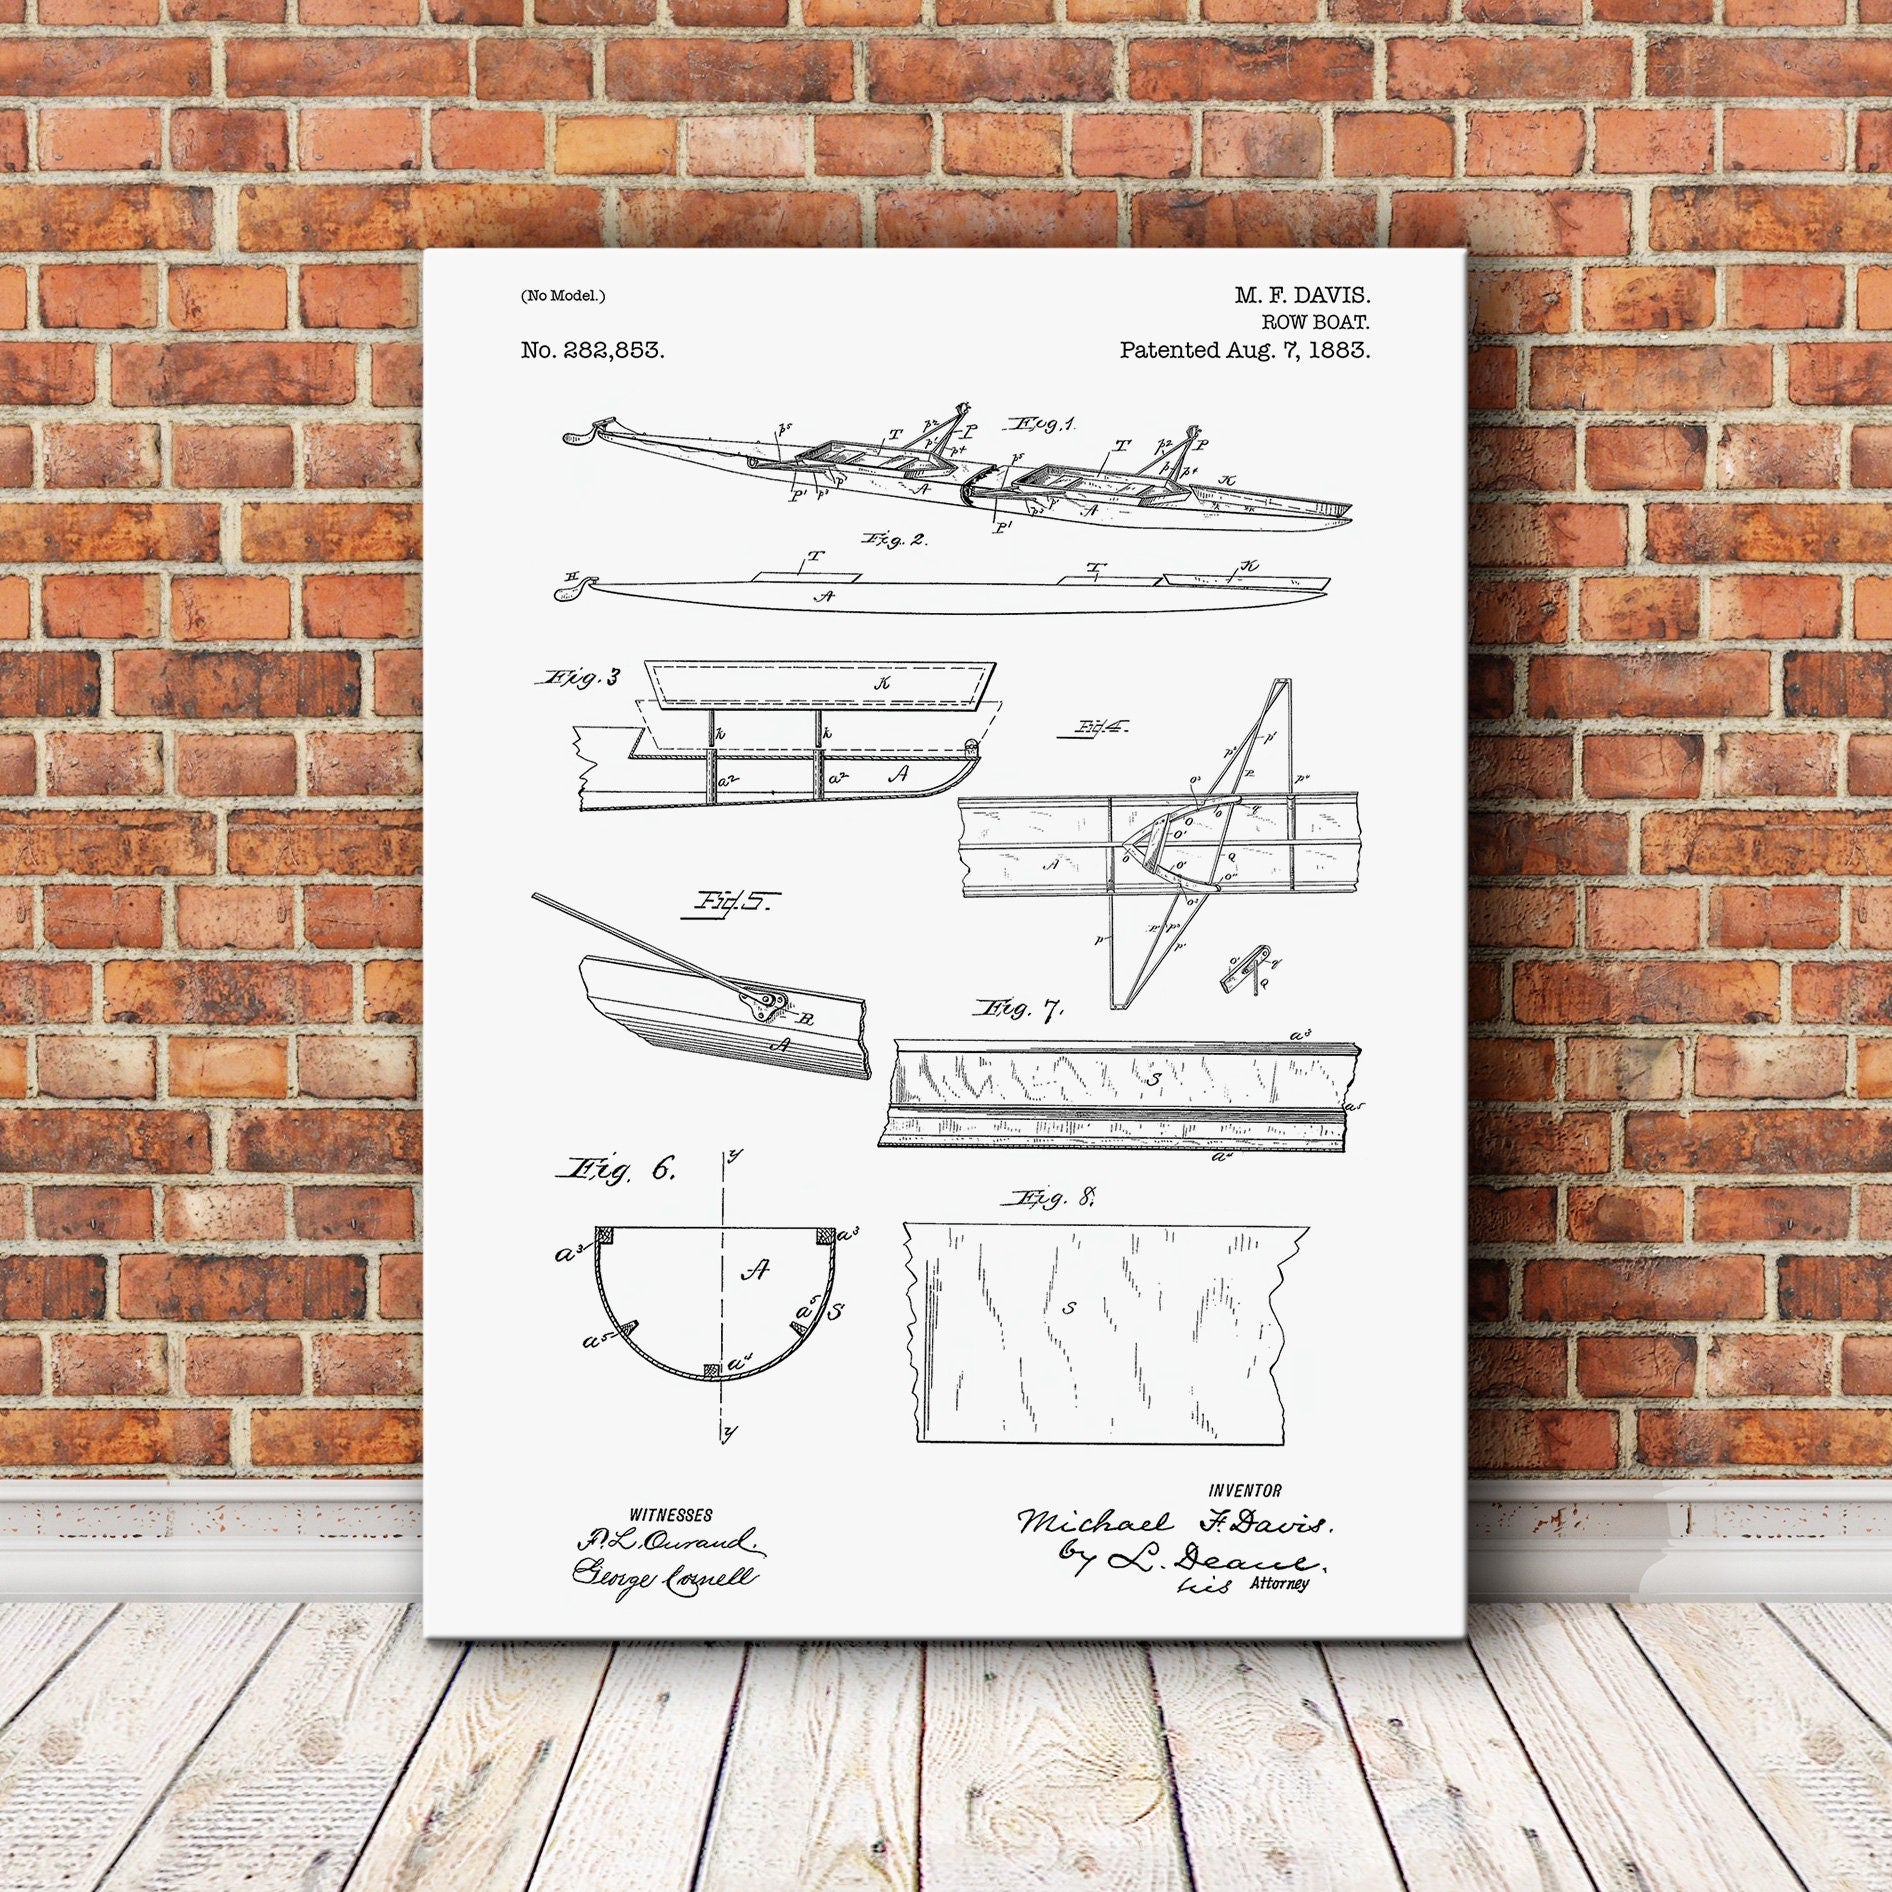 Nautical Patent print, Row Boar for Nautical Patent print, Patent print, Patent print design, Vintage patent print, Nautical Art